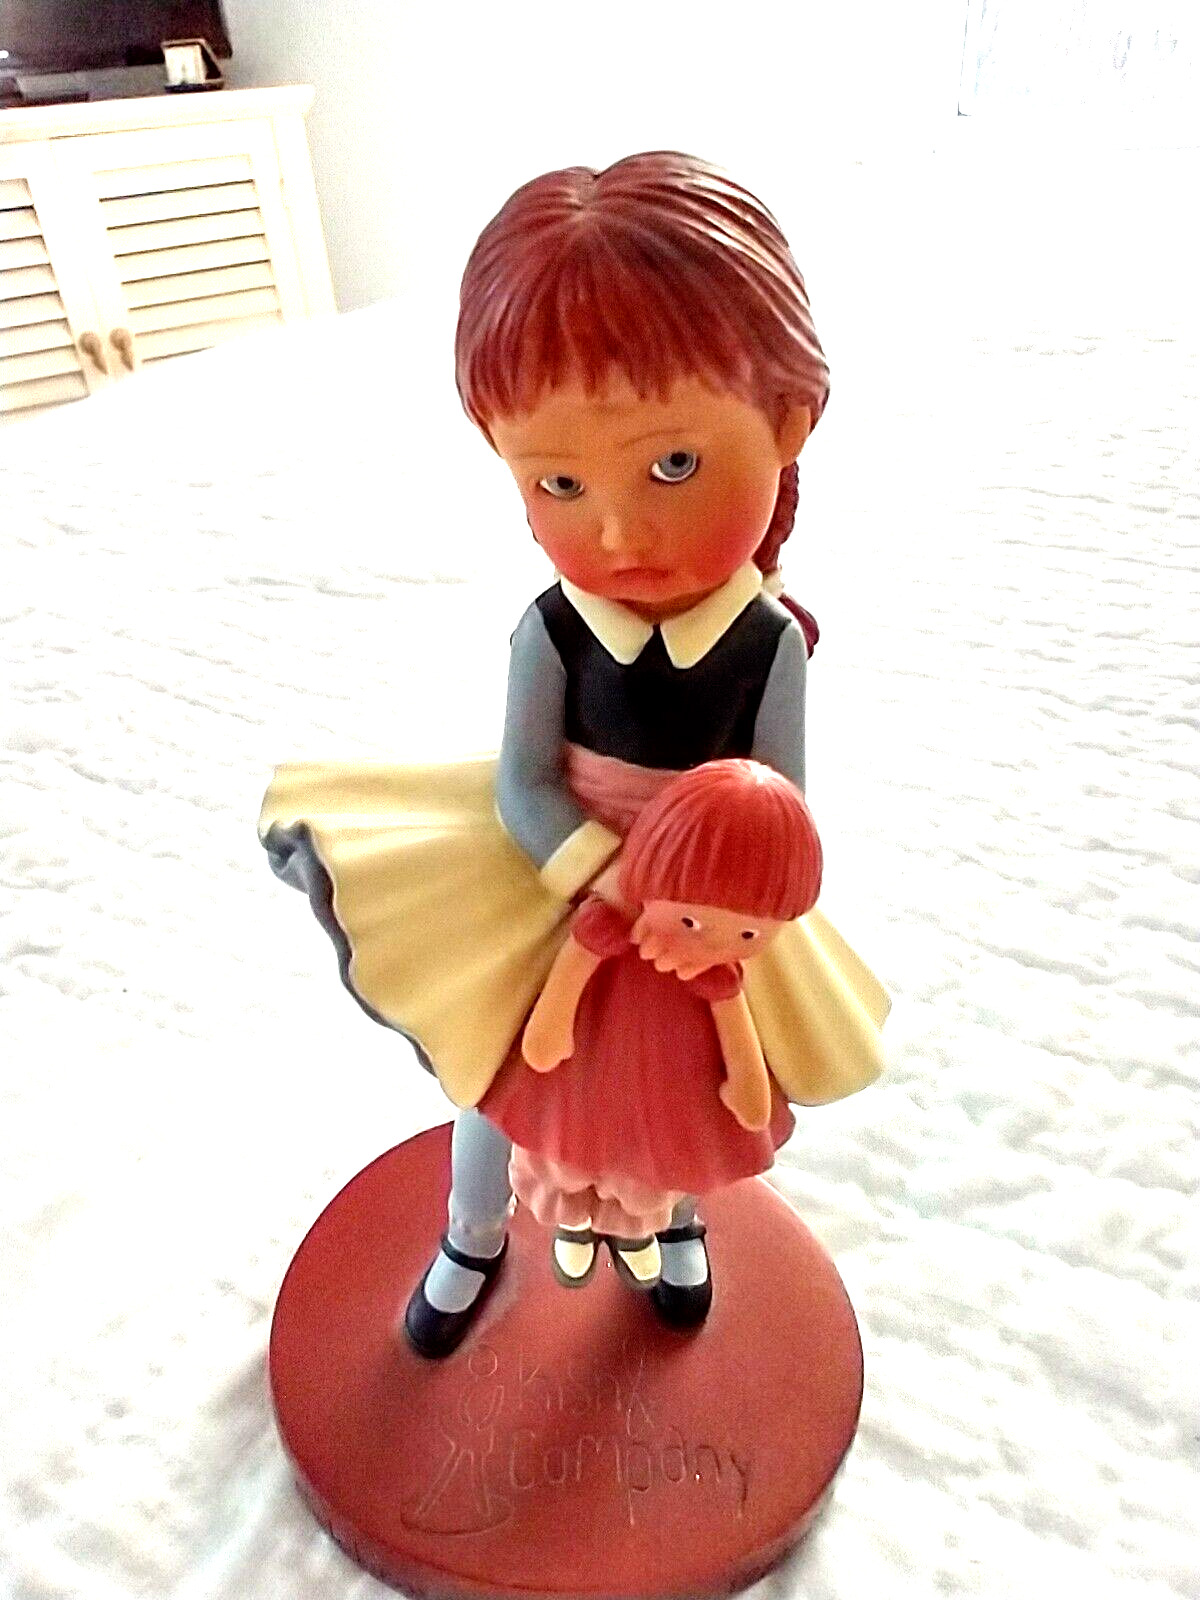 Kish & Company Little Girl Figurine Holding a Doll, Celebrating 15 yrs 1991-2006